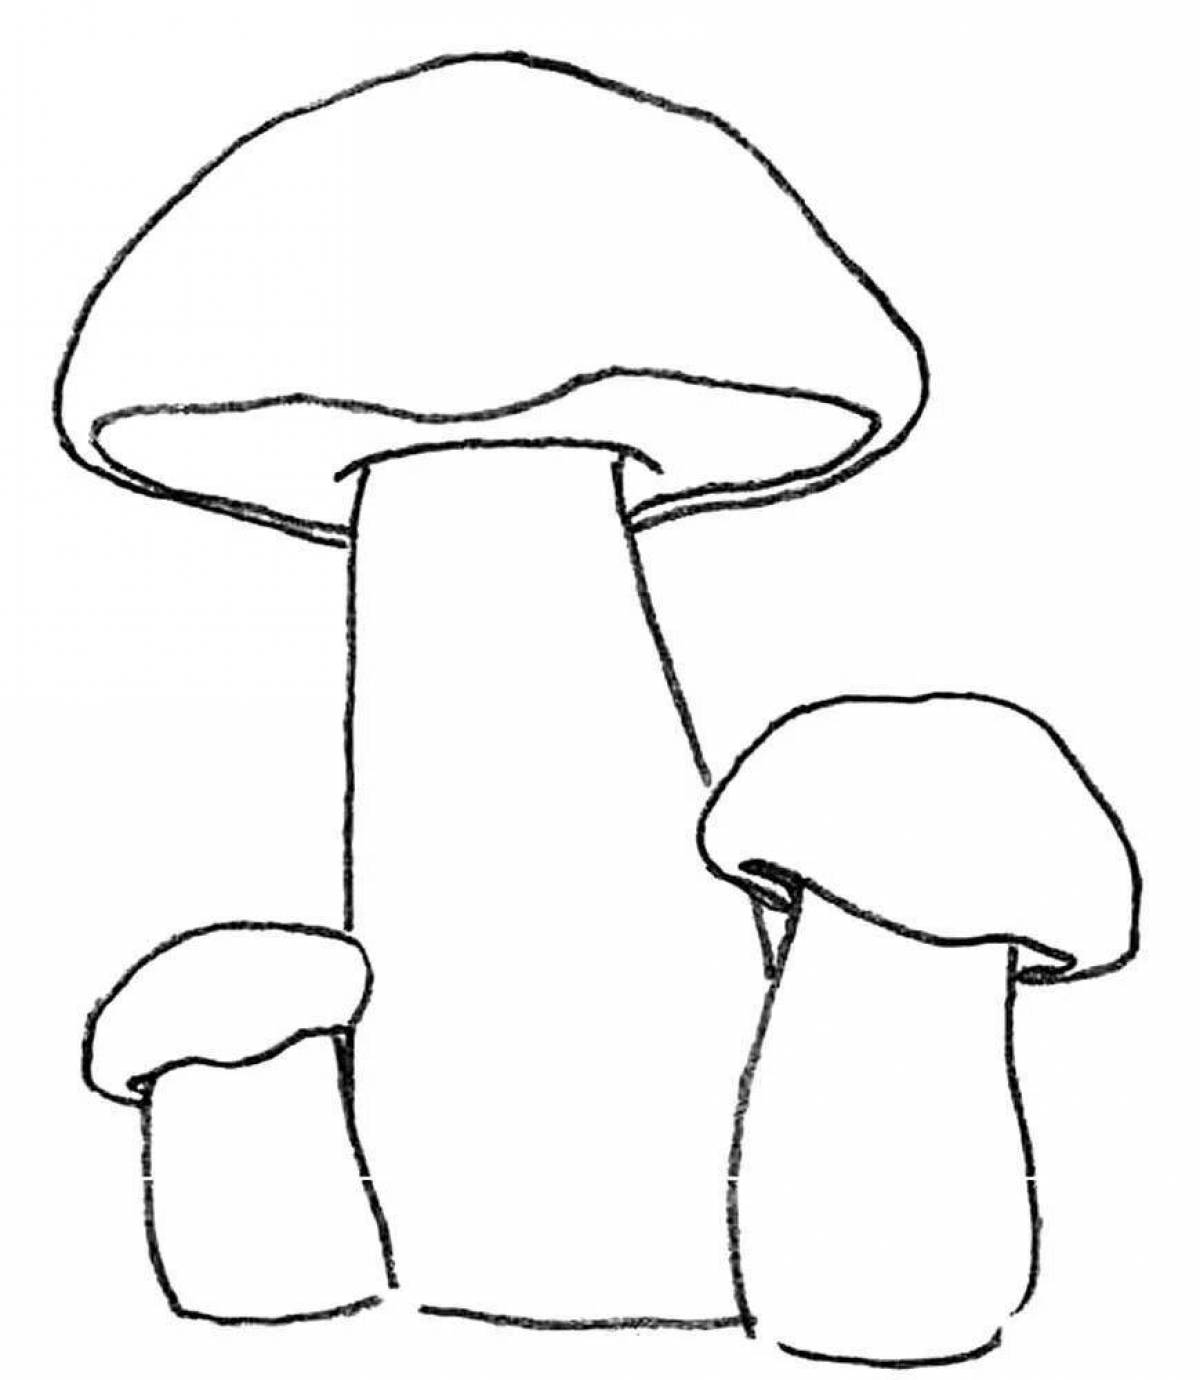 Refreshing white mushroom coloring page